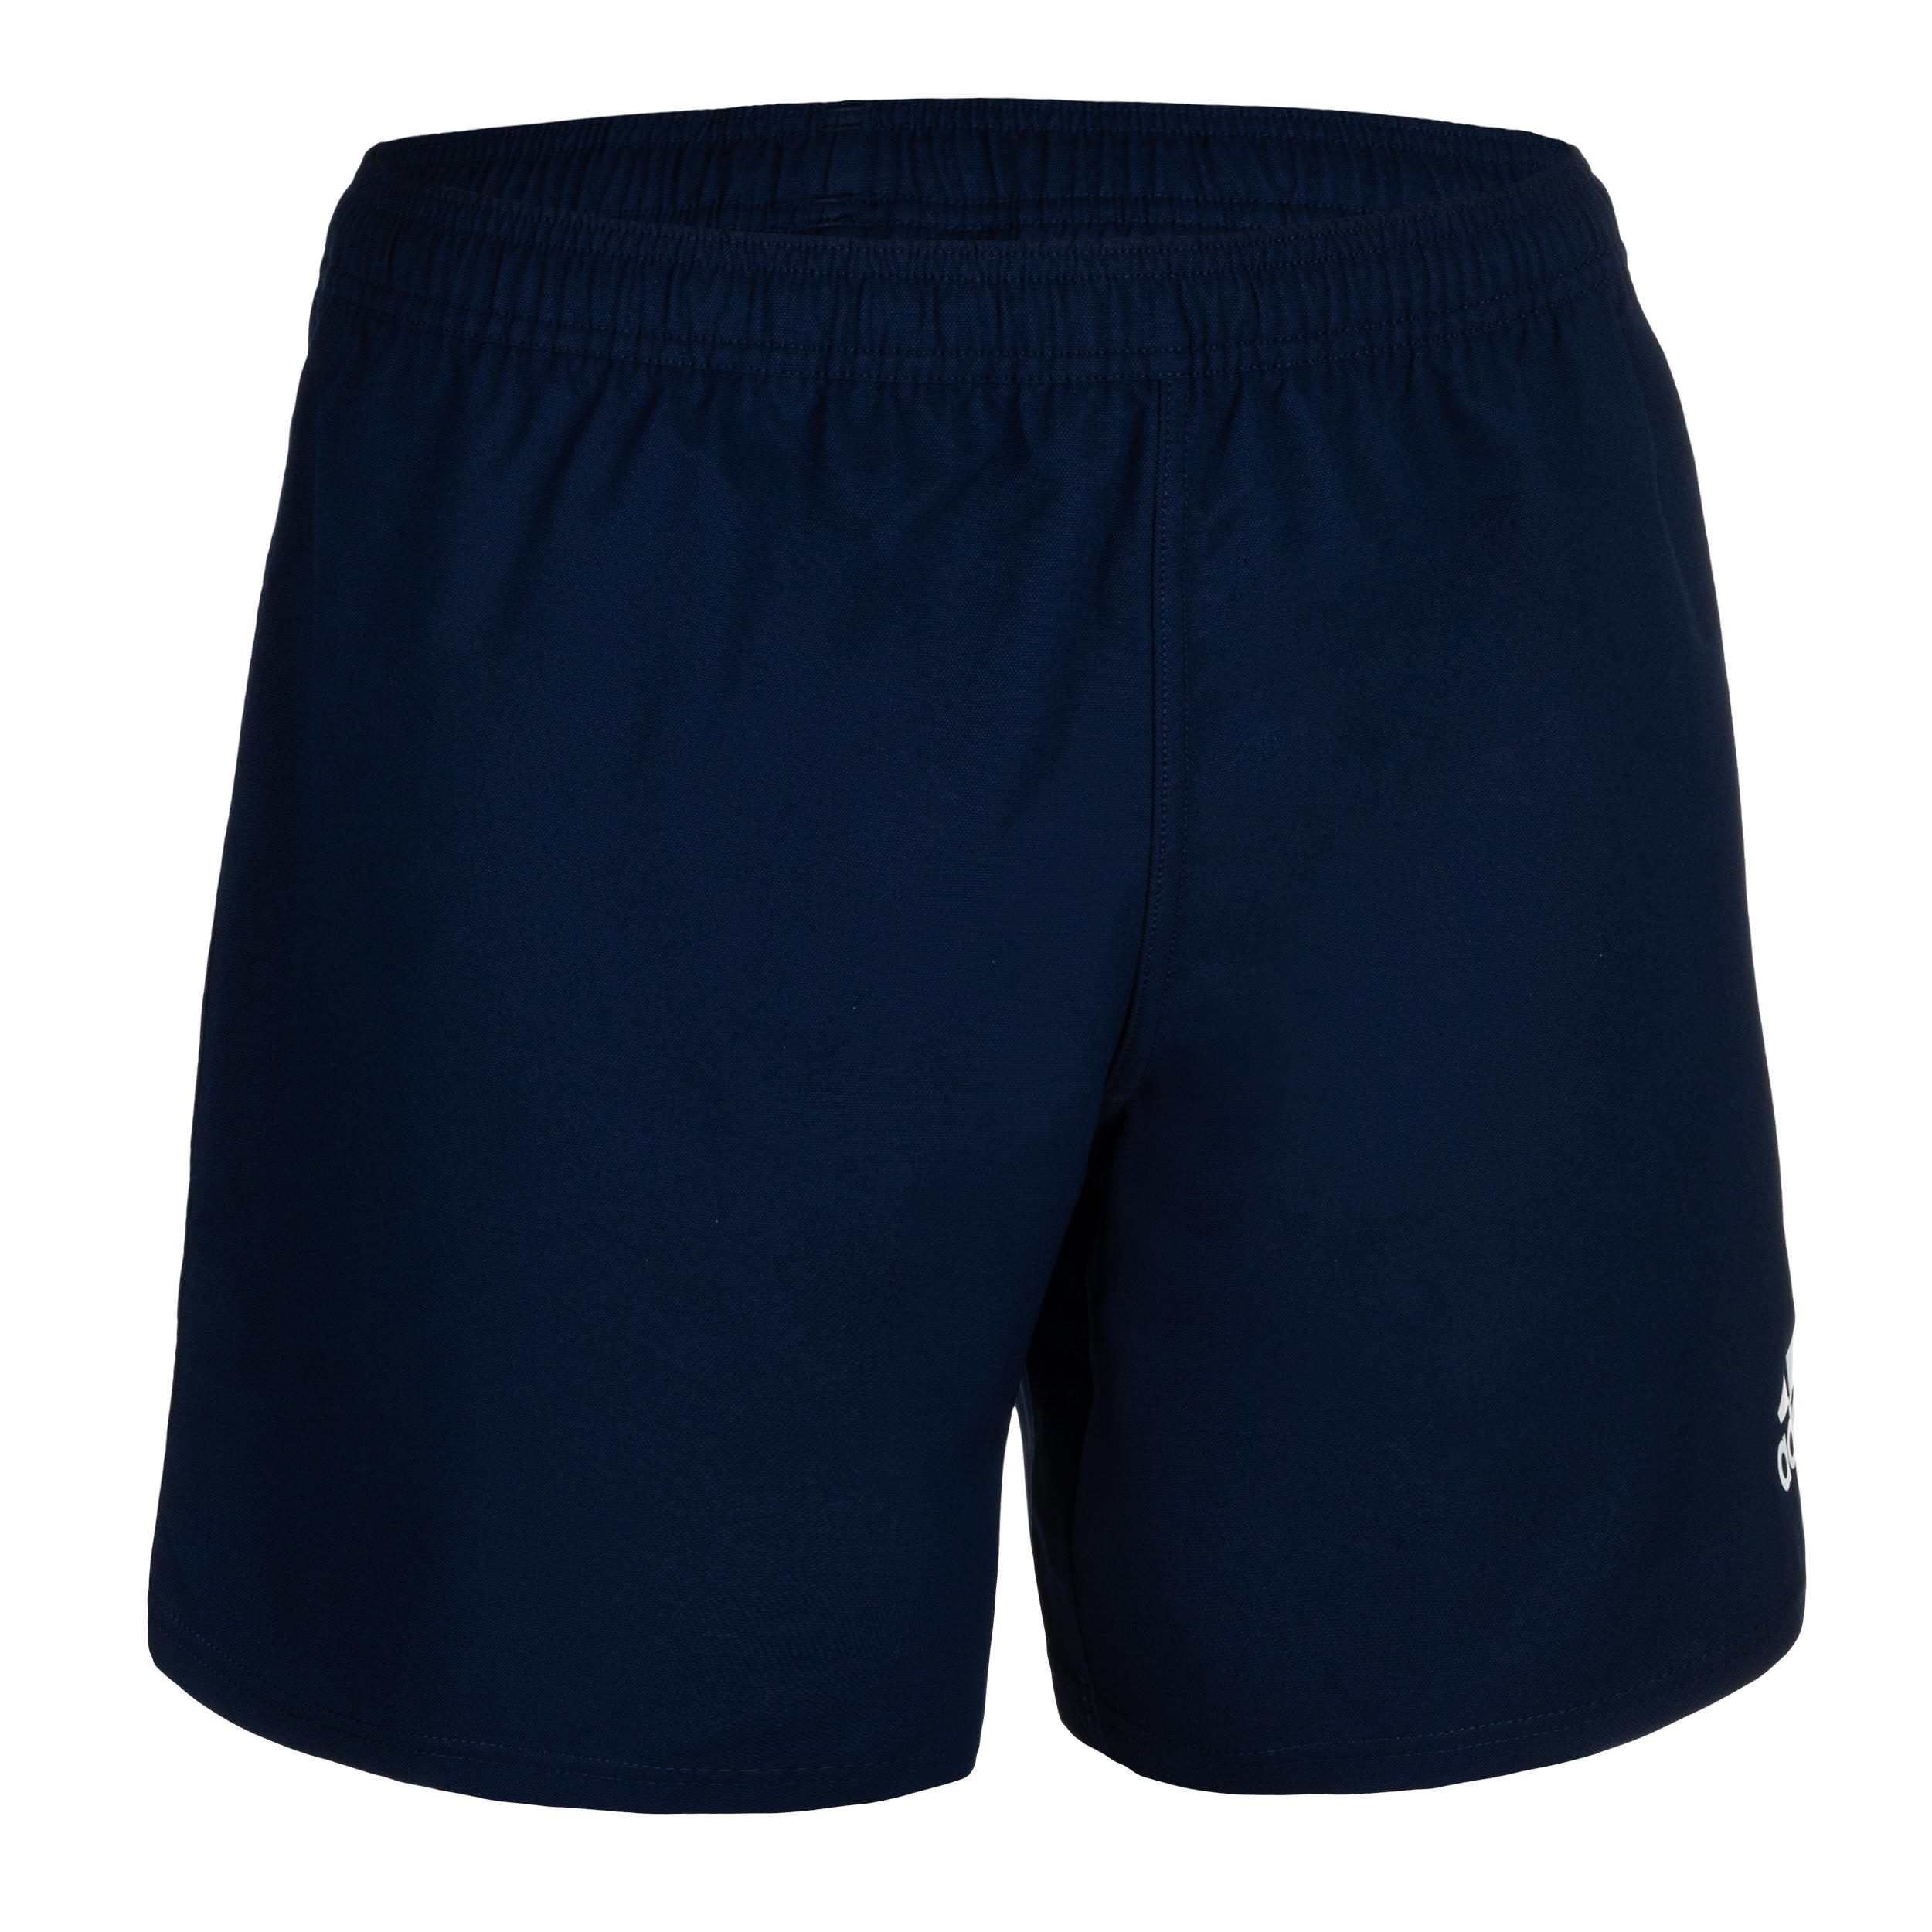 Pantalón corto rugby Adidas 3F Hombre azul ADIDAS | Decathlon